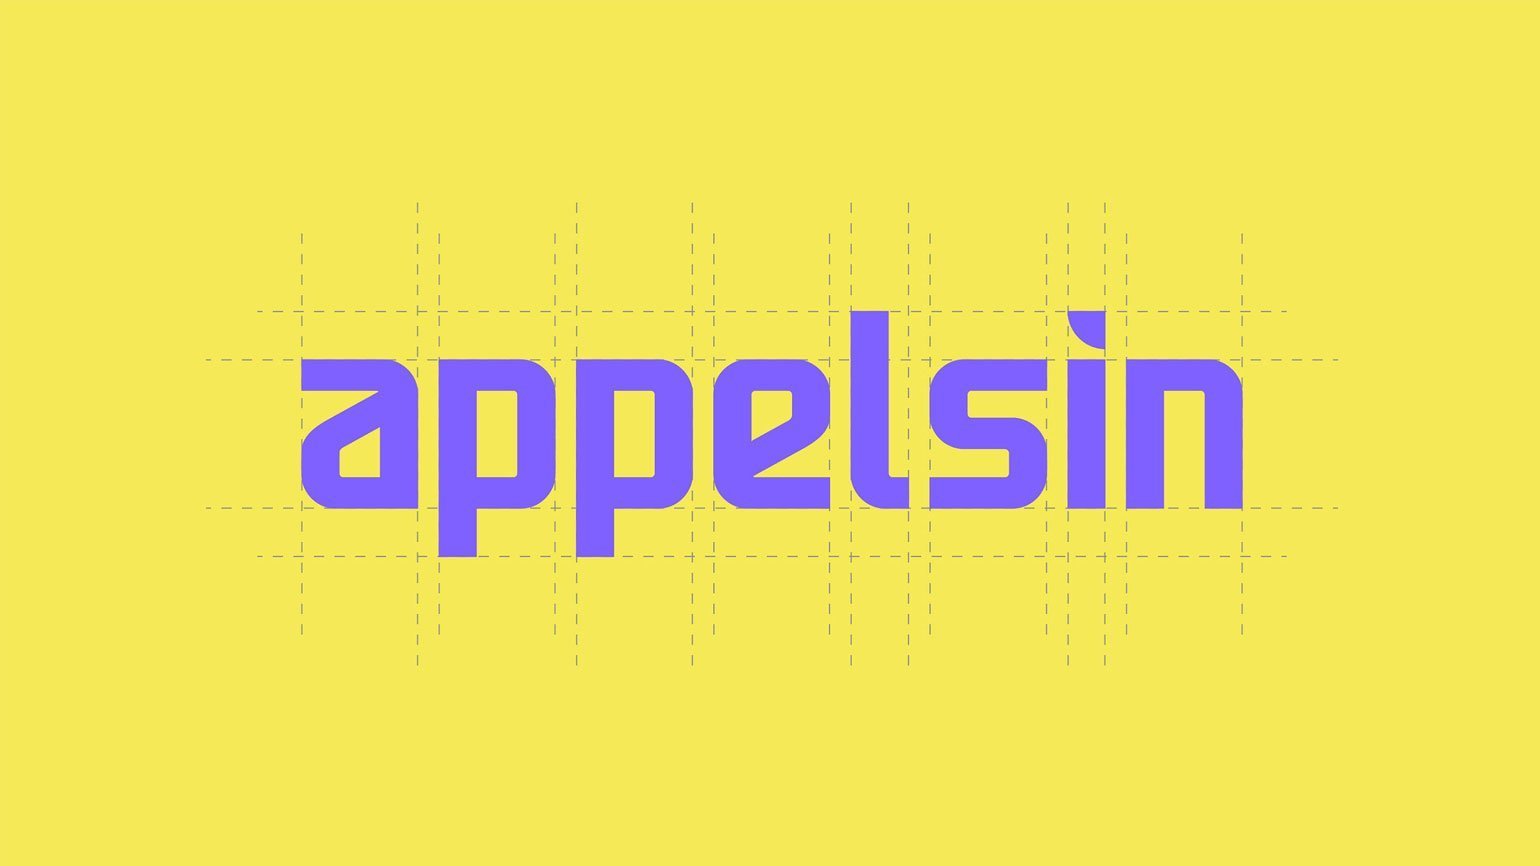 типографика для логотипа на латинице фиолетового цвета на жёлтом фоне